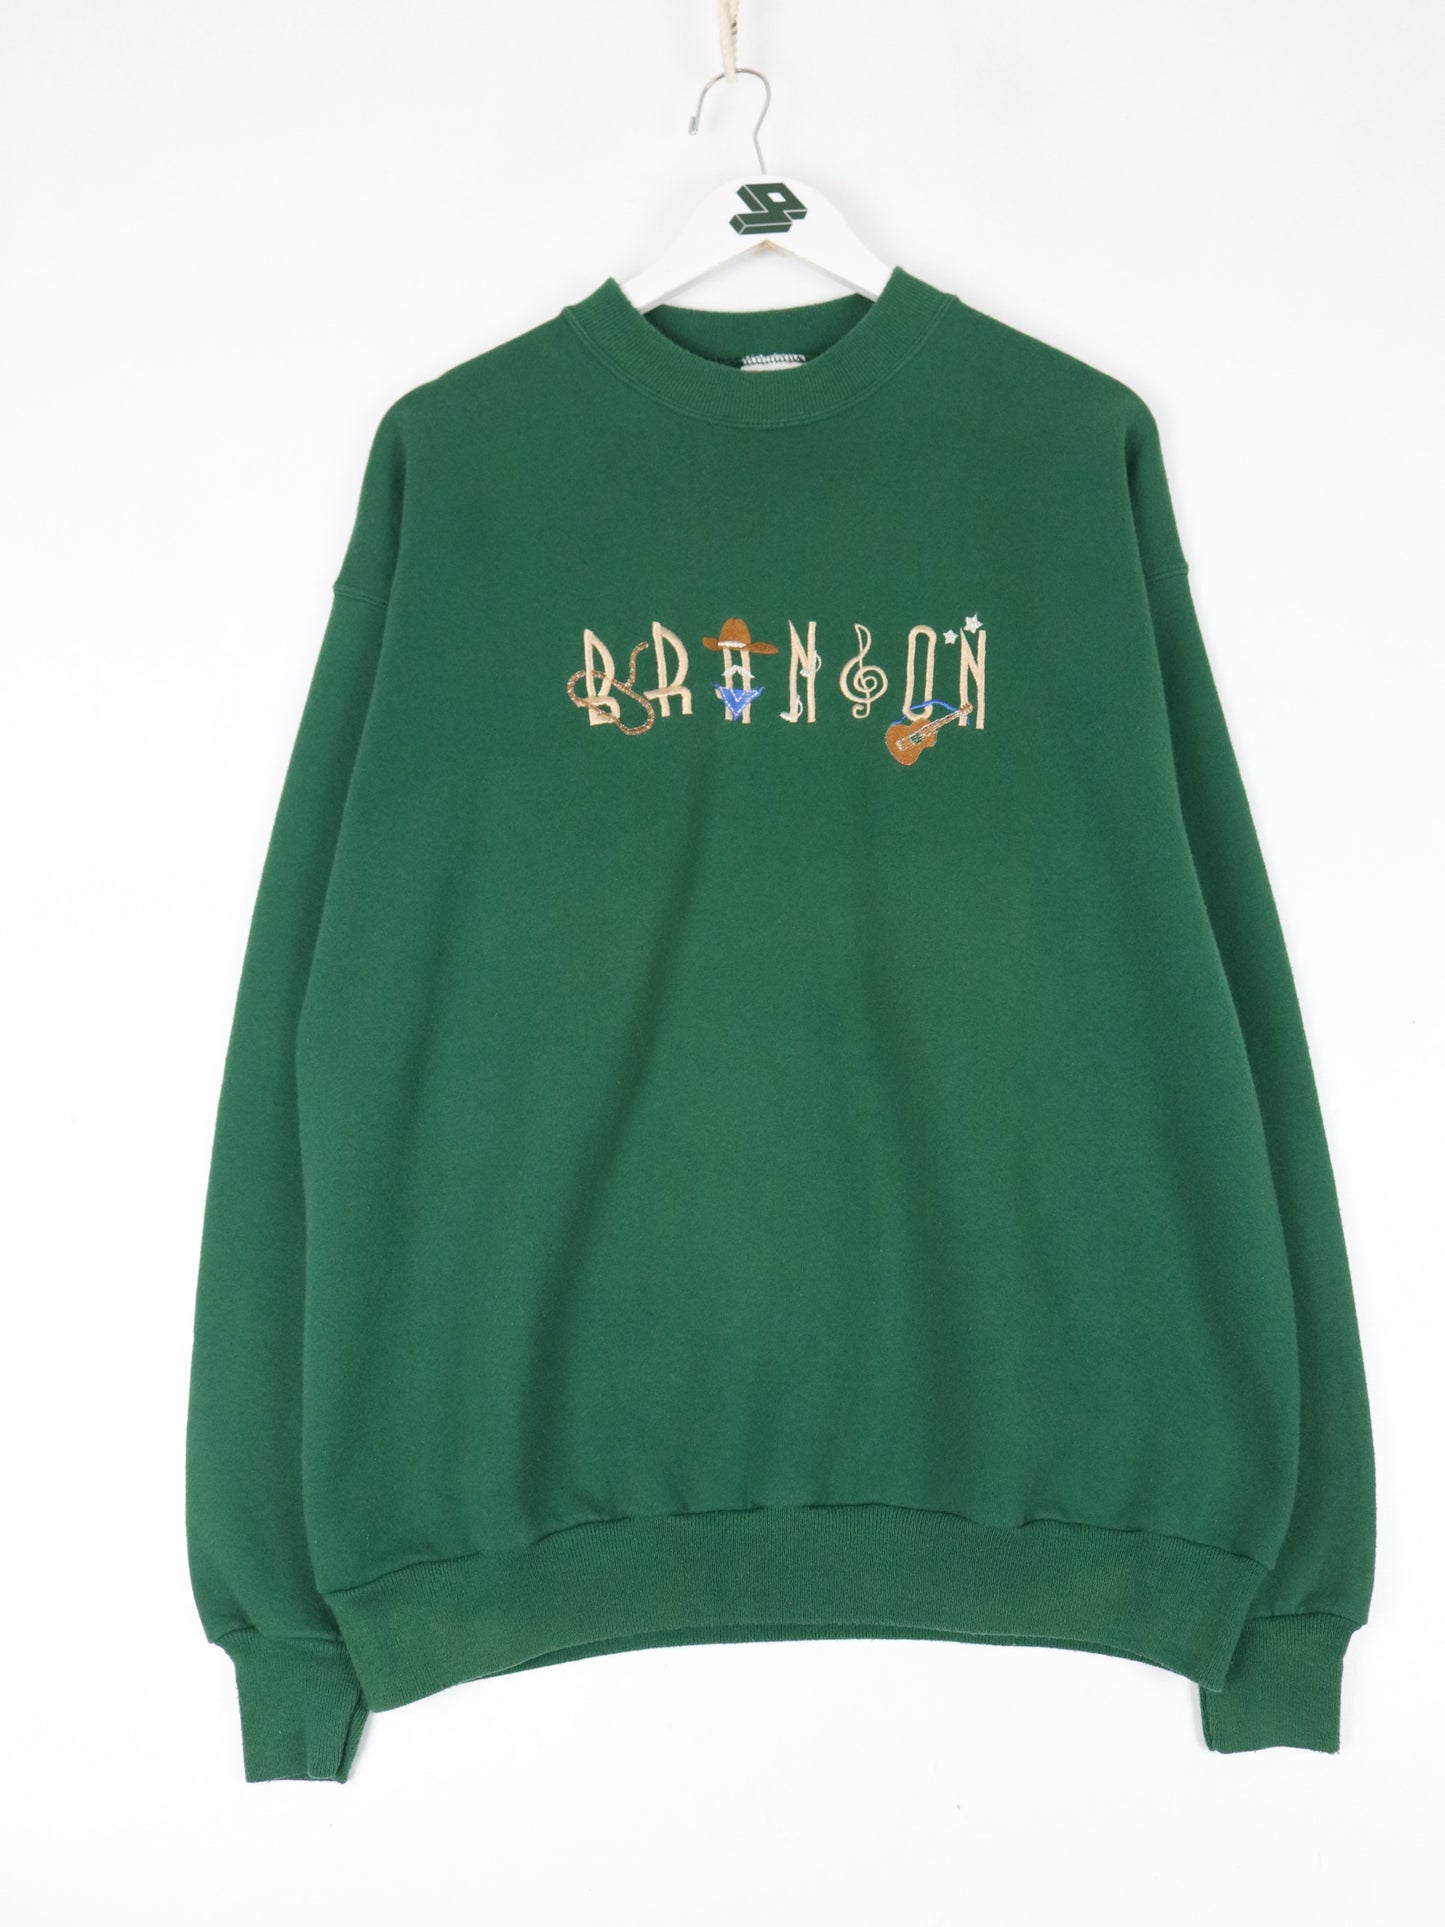 Vintage Branson Sweatshirt Mens XL Green 90s